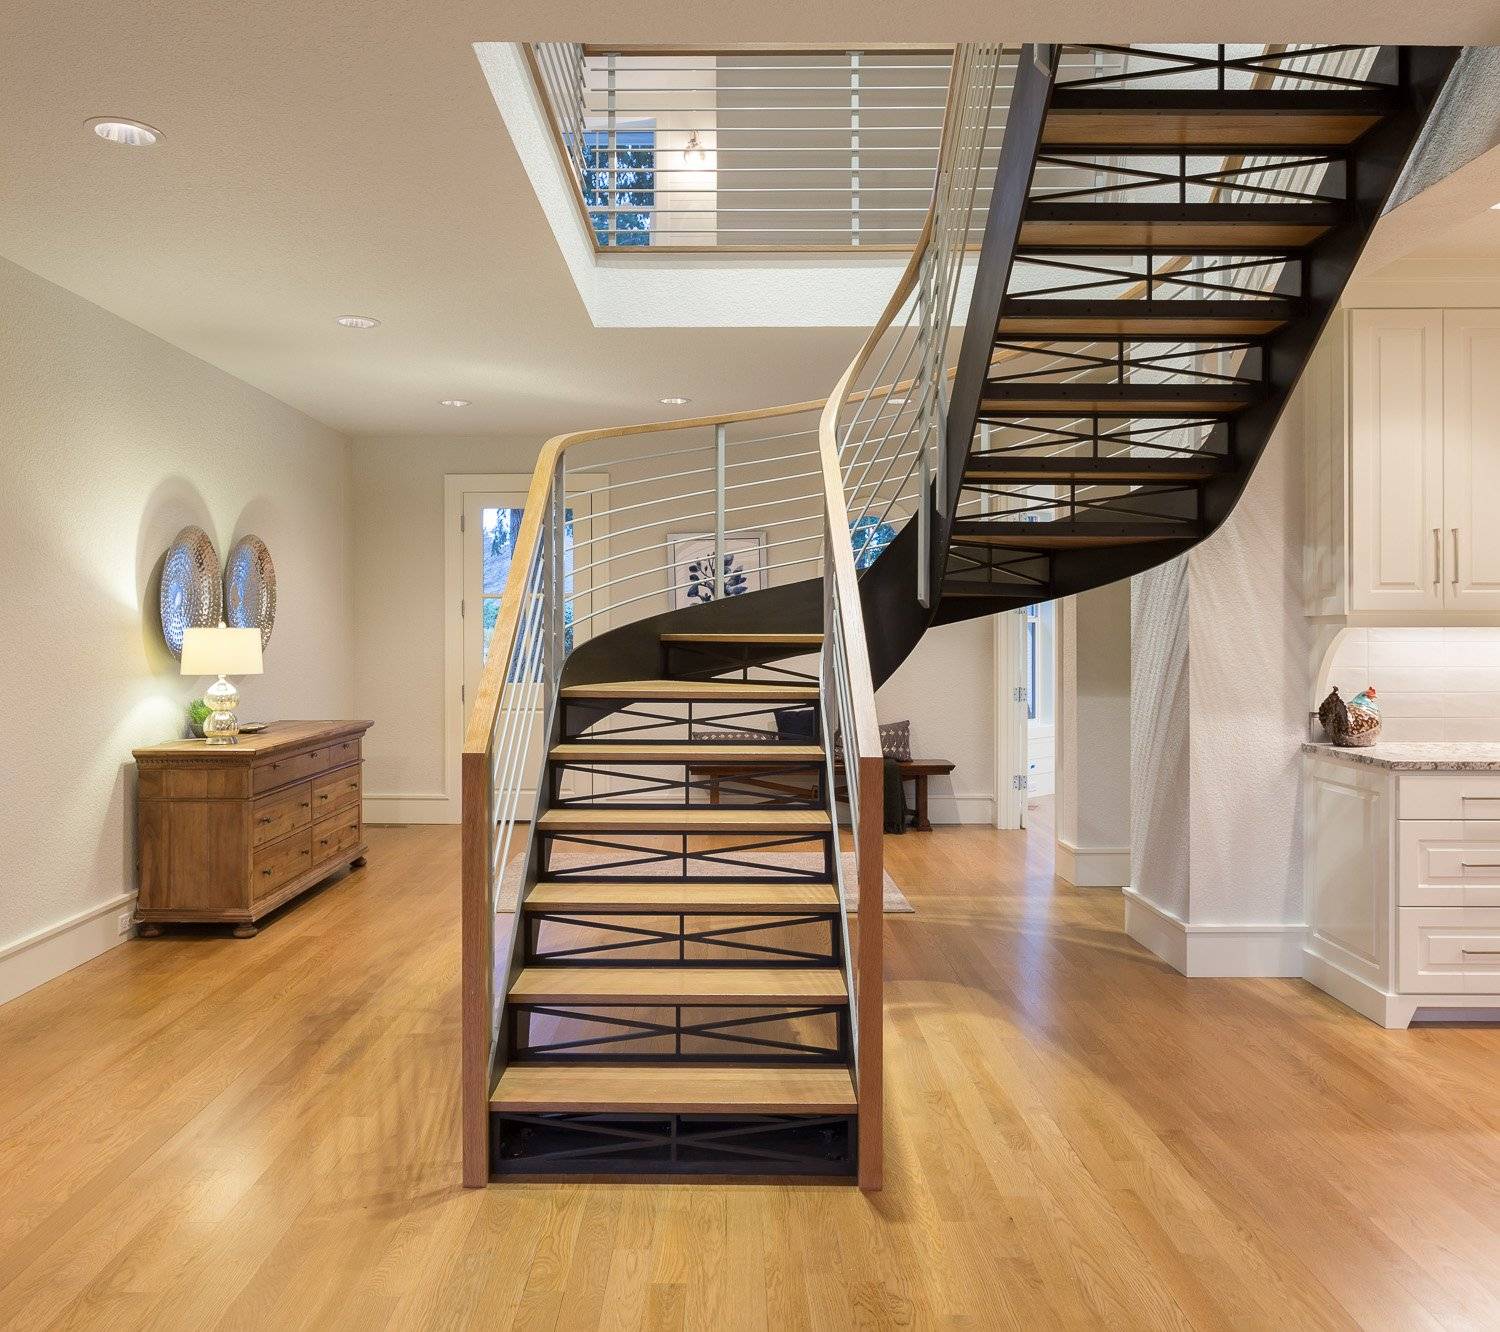 Сайт новая лестница. Мансардная лестница двухмаршевая. Лестница в доме. Лестница в частном доме. Лестница на второй этаж.